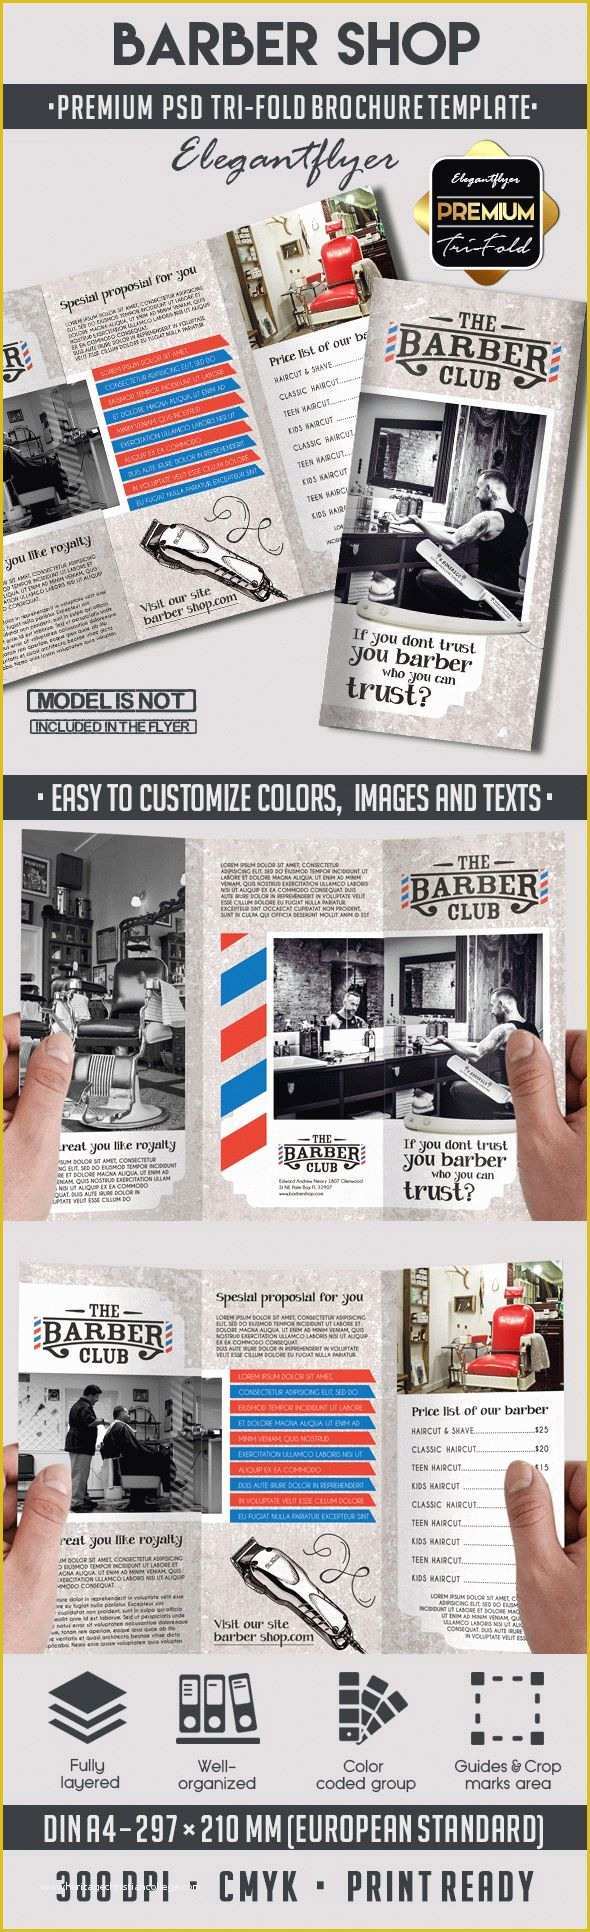 Free Barber Shop Template Psd Of the Barber Club Tri Fold Brochure – by Elegantflyer